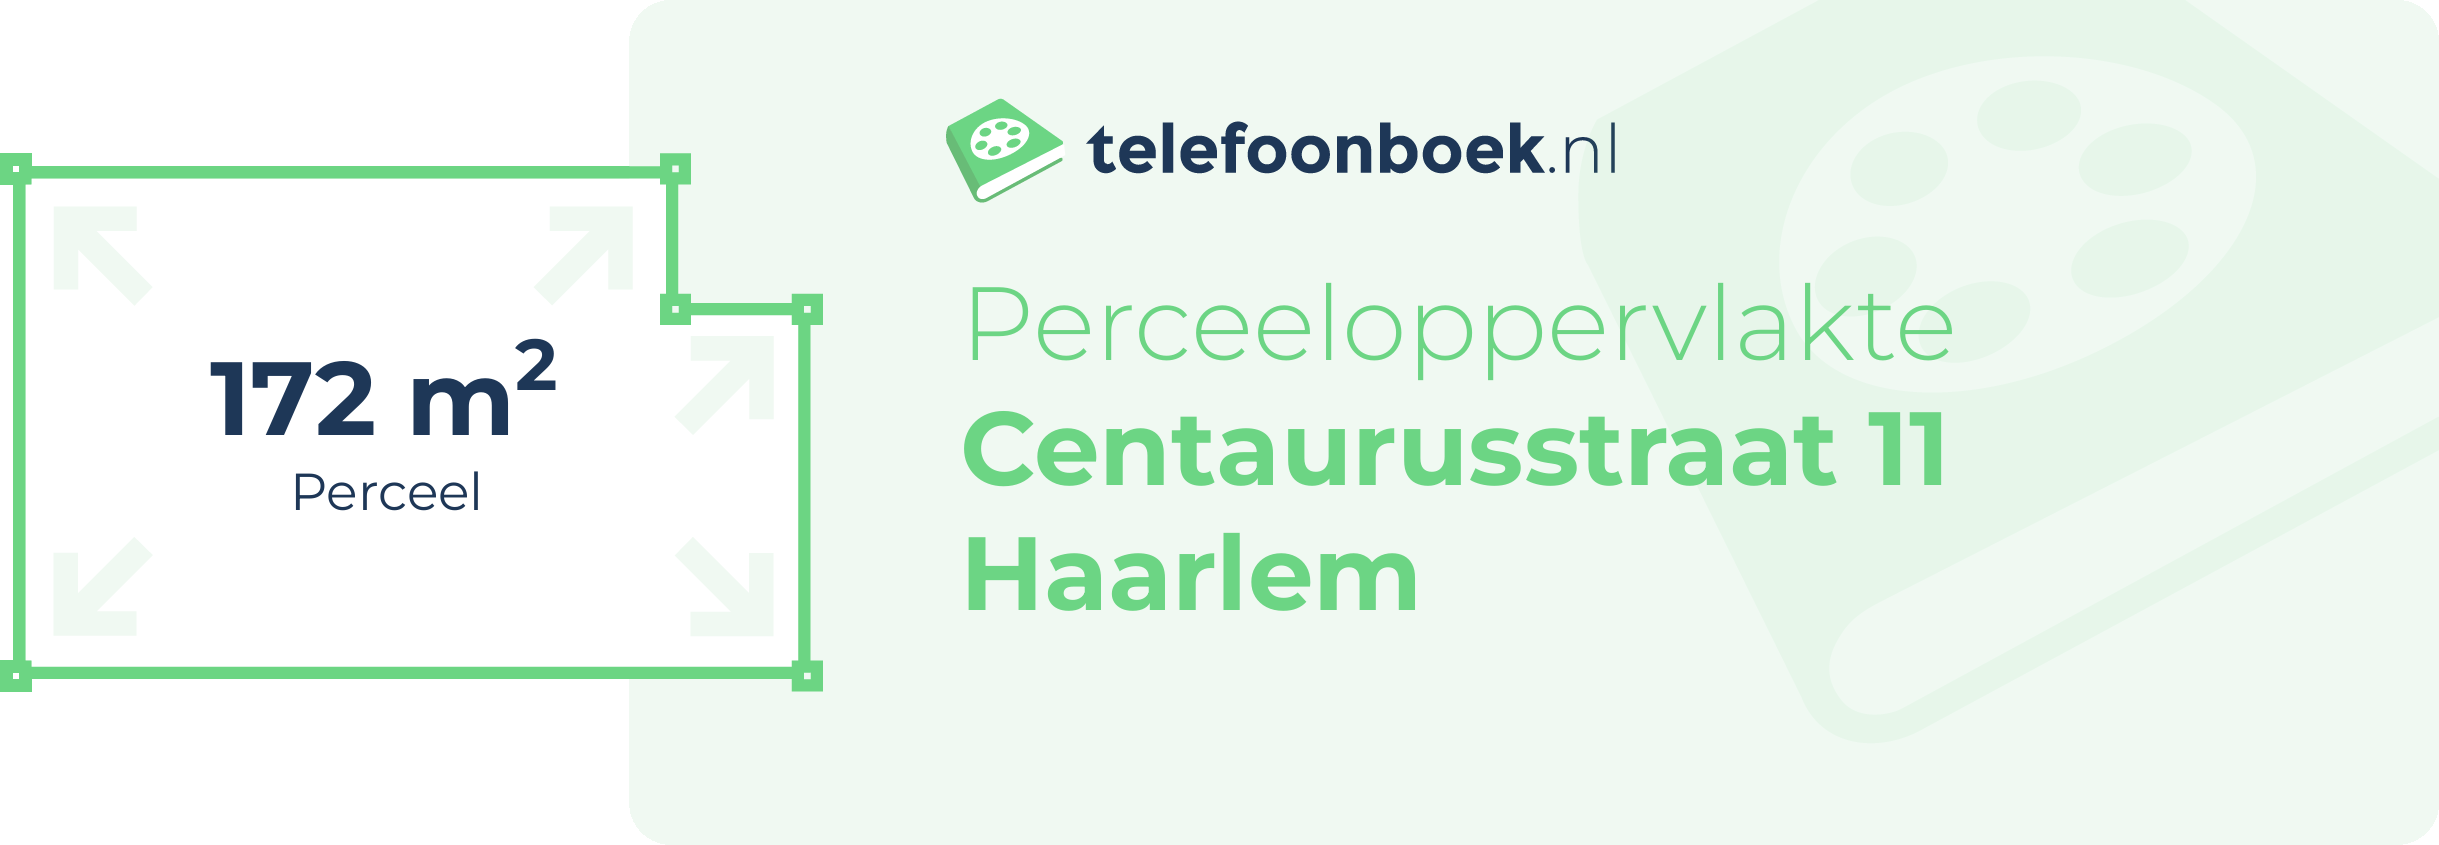 Perceeloppervlakte Centaurusstraat 11 Haarlem